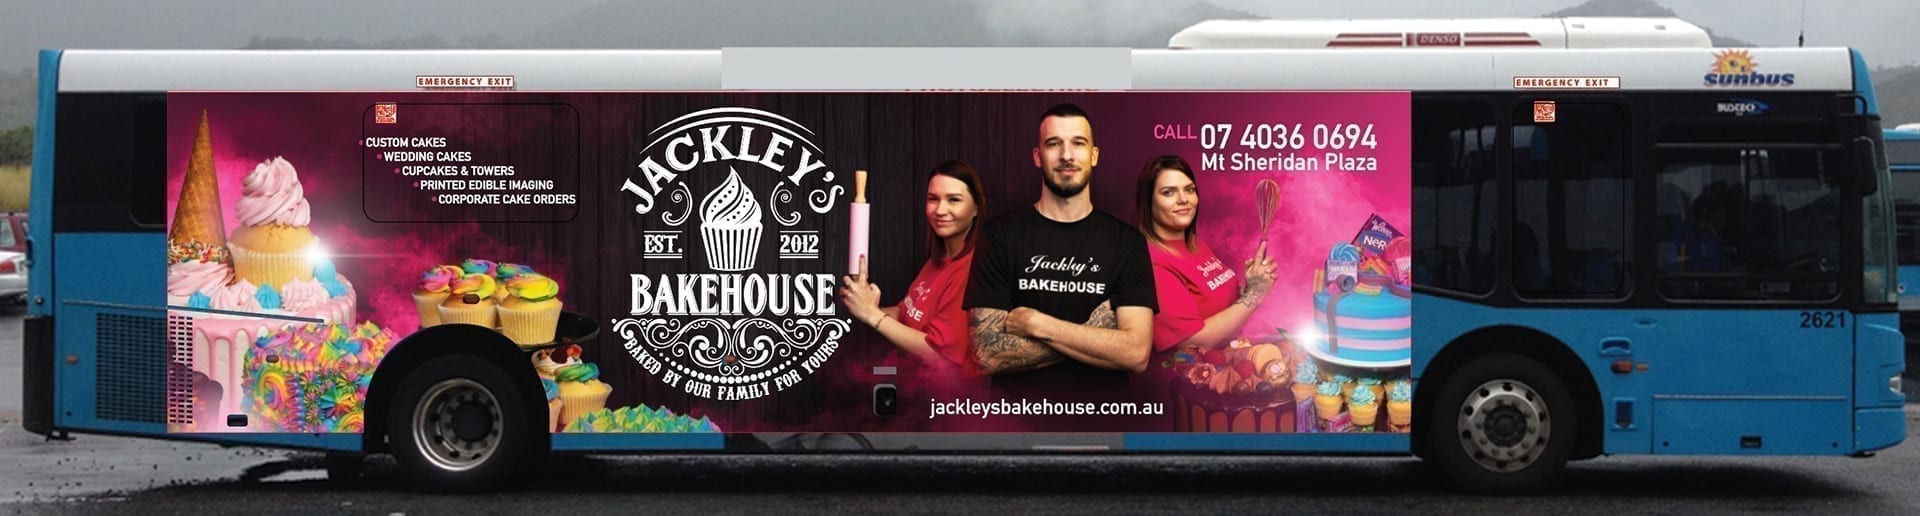 Jackley’s Bakehouse Bus